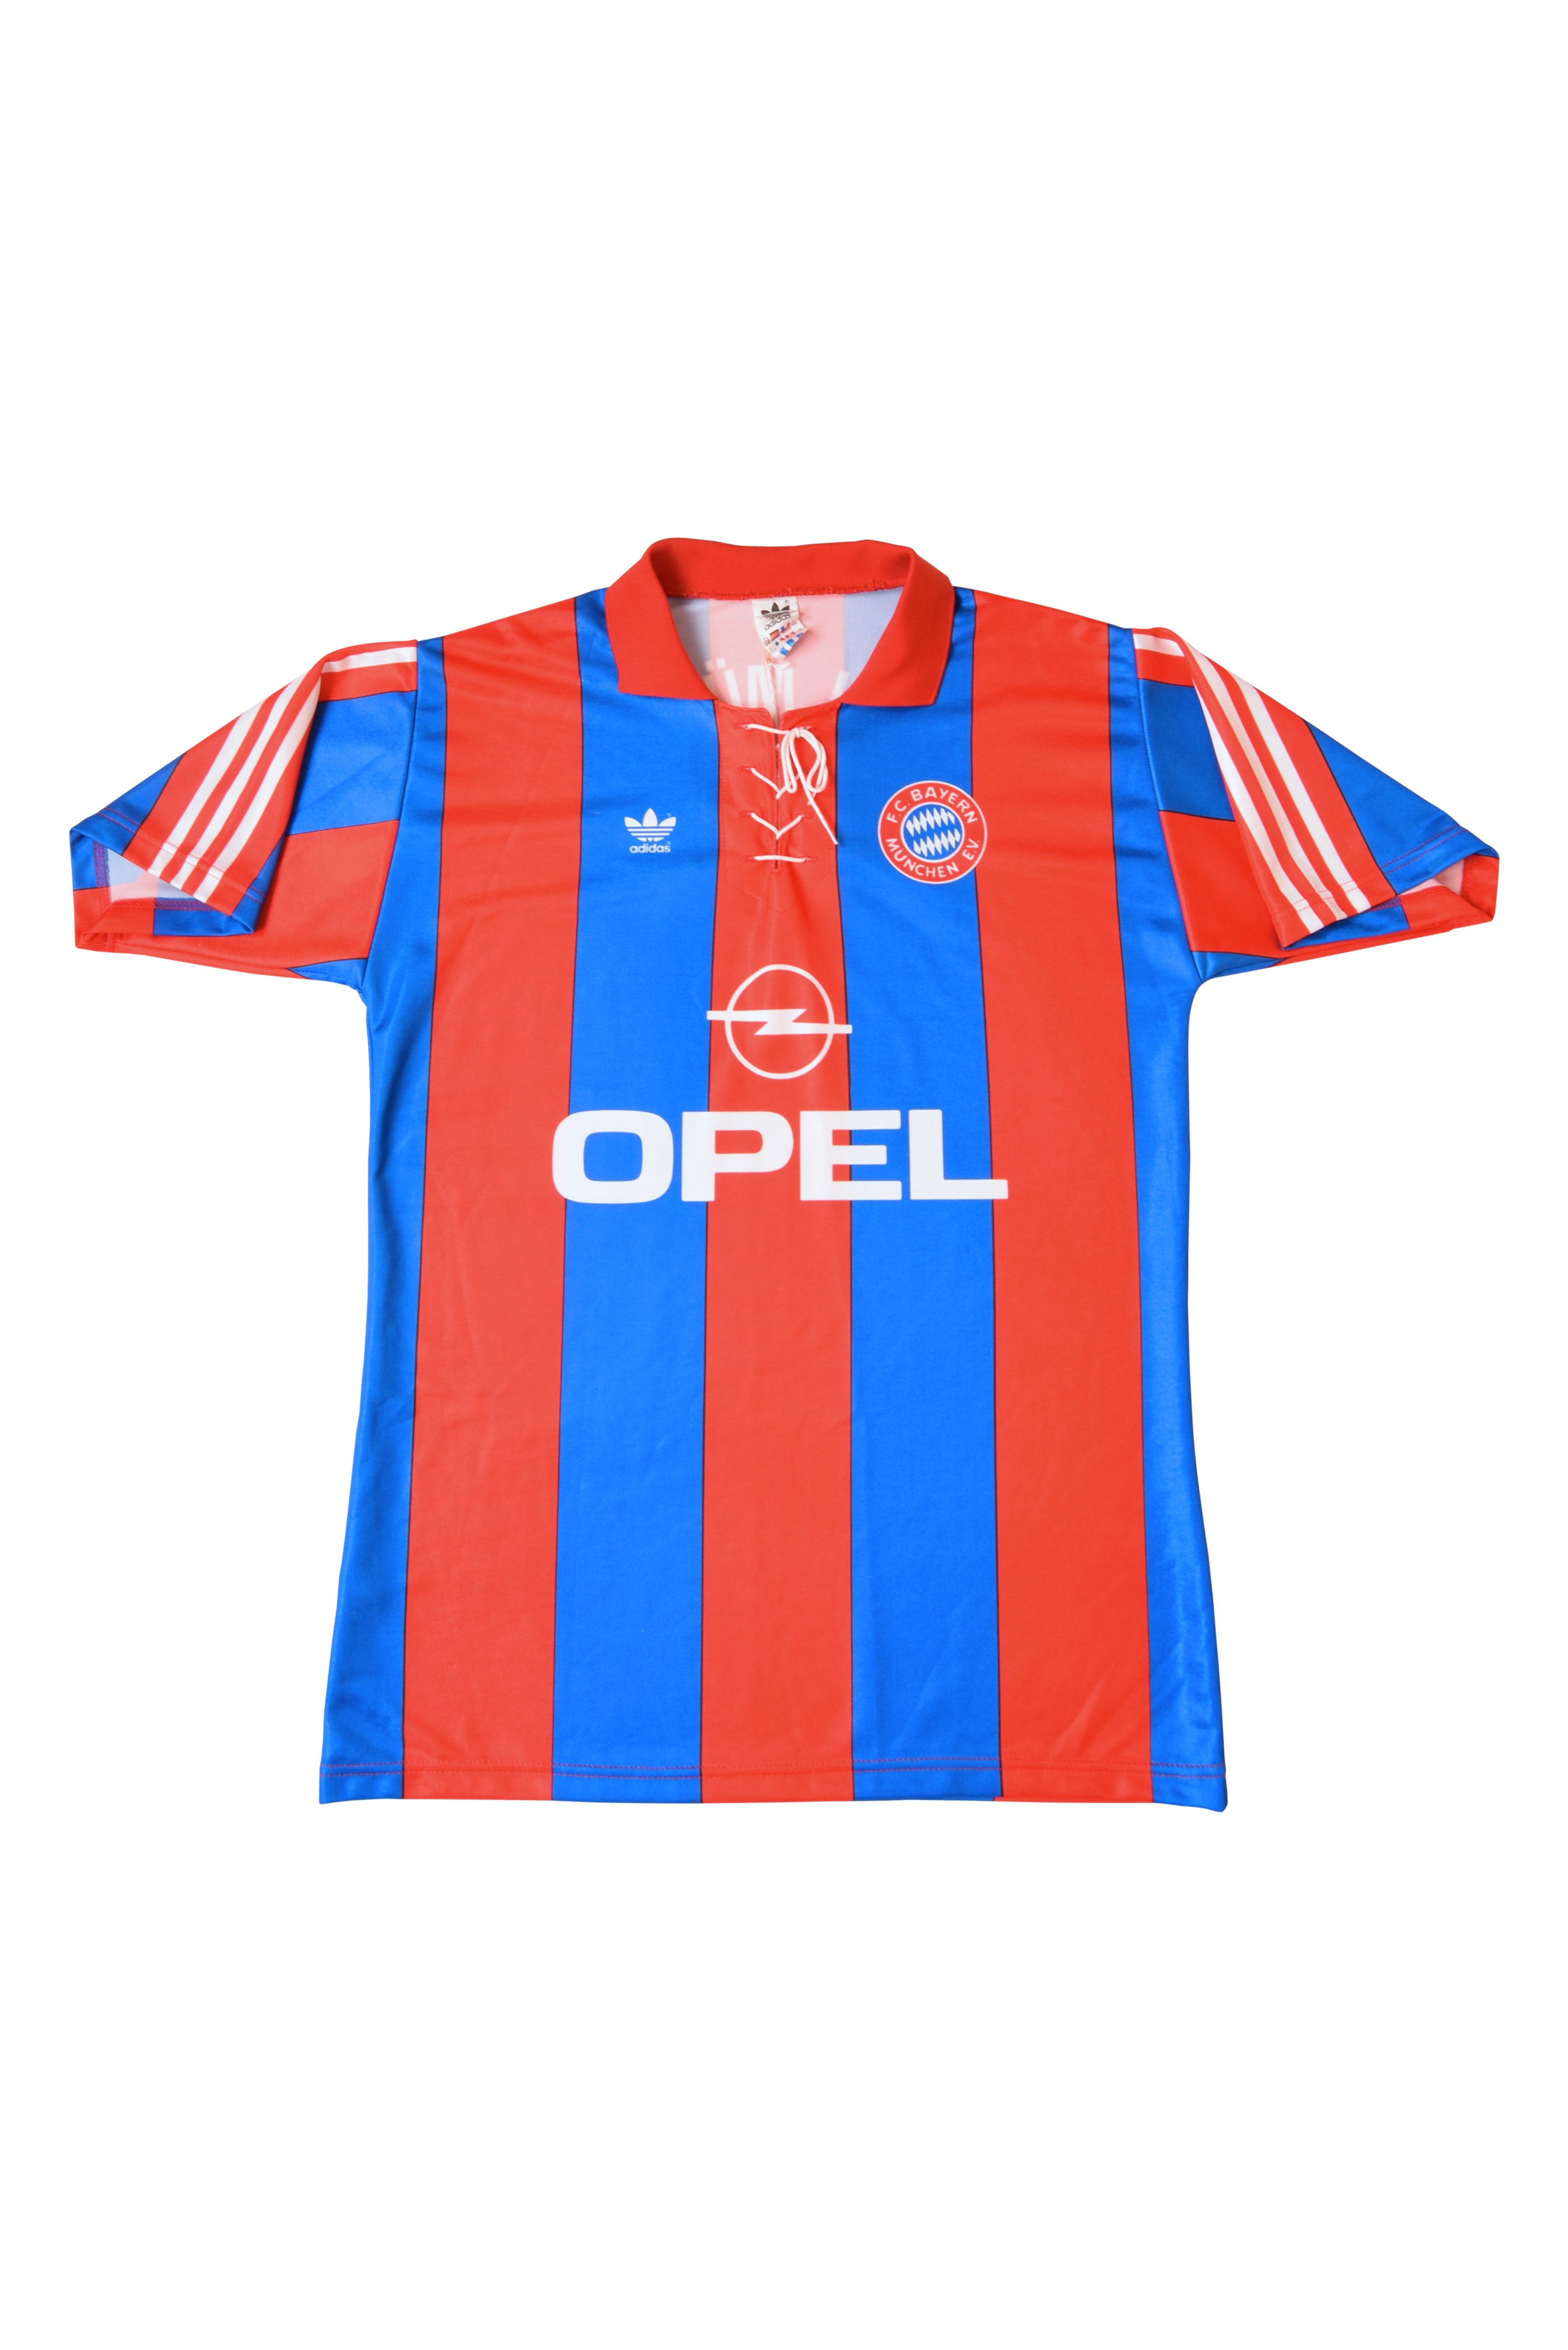 Very Rare Bayern Munich / Munchen Adidas 1989-1990 Special Edition 